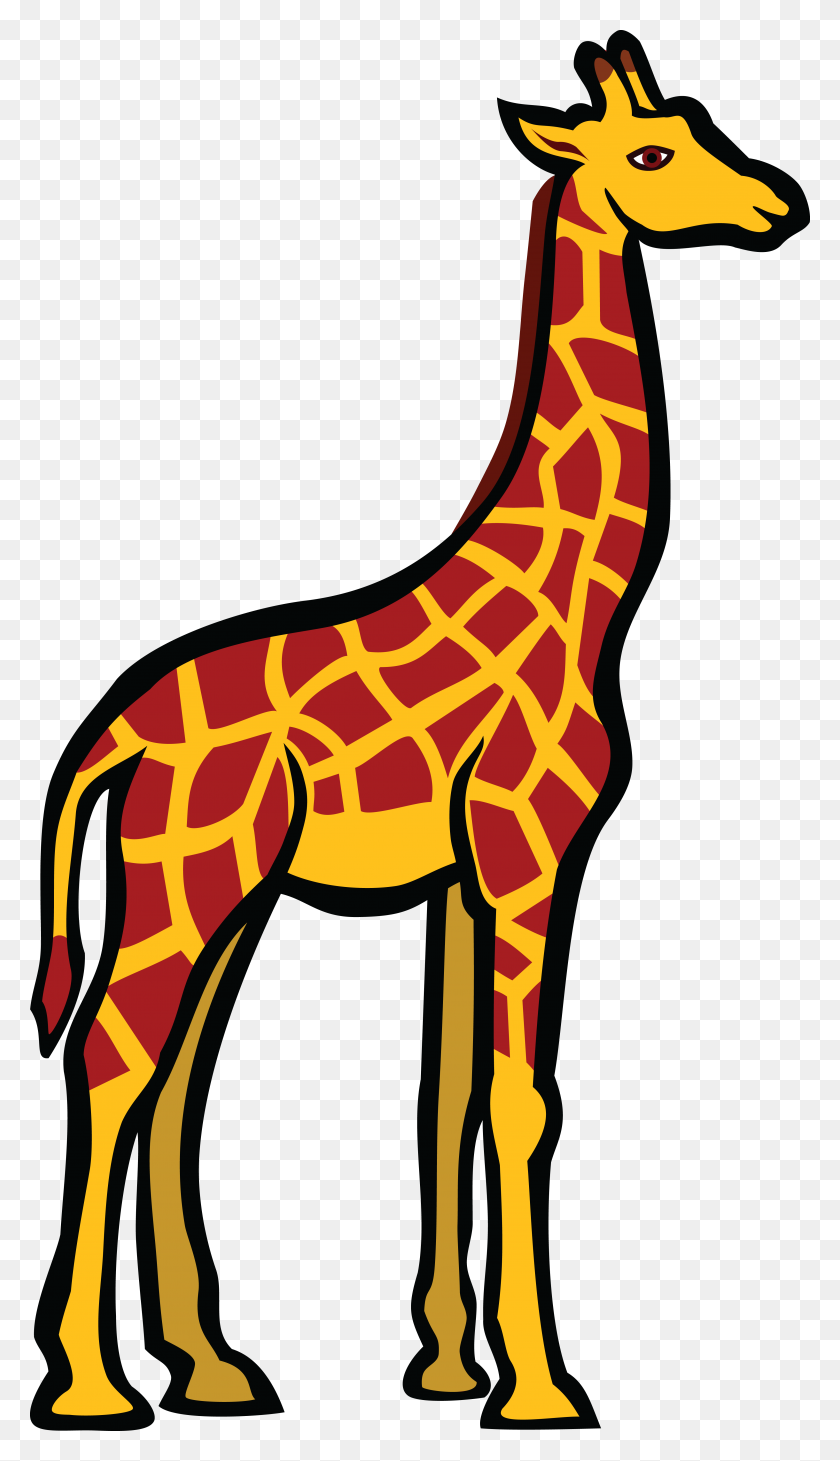 4000x7188 Free Clipart Of A Giraffe - Giraffe Clip Art Free